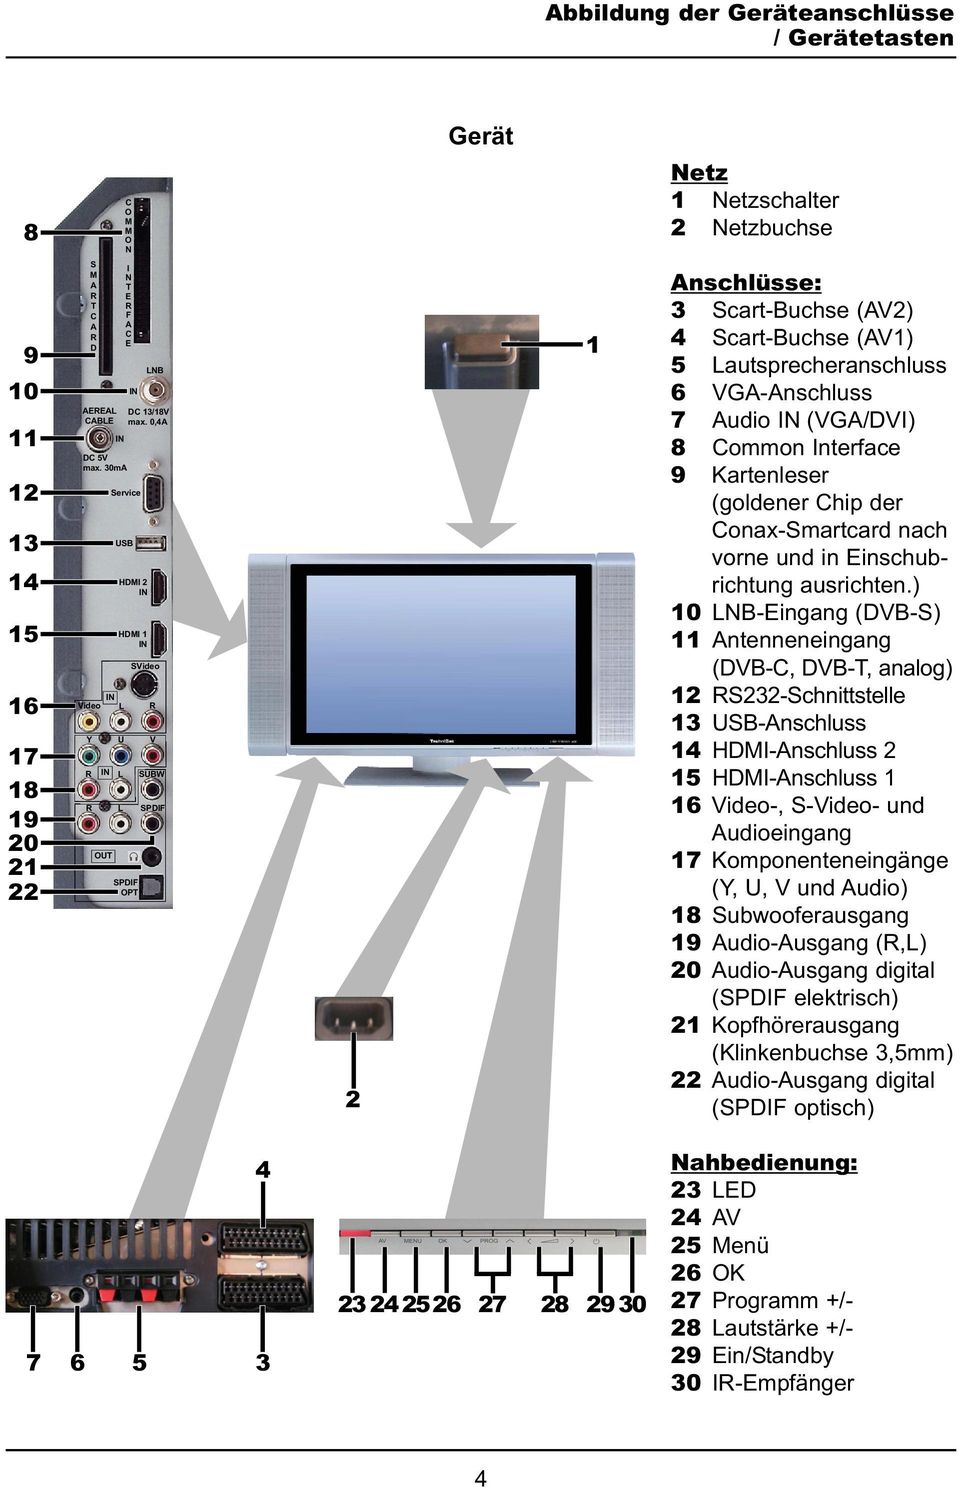 30mA Service USB HDMI 2 IN HDMI 1 IN SVideo IN Video L R Y U V R IN L SUBW R L SPDIF OUT SPDIF OPT 2 1 Anschlüsse: 3 Scart-Buchse (AV2) 4 Scart-Buchse (AV1) 5 Lautsprecheranschluss 6 VGA-Anschluss 7